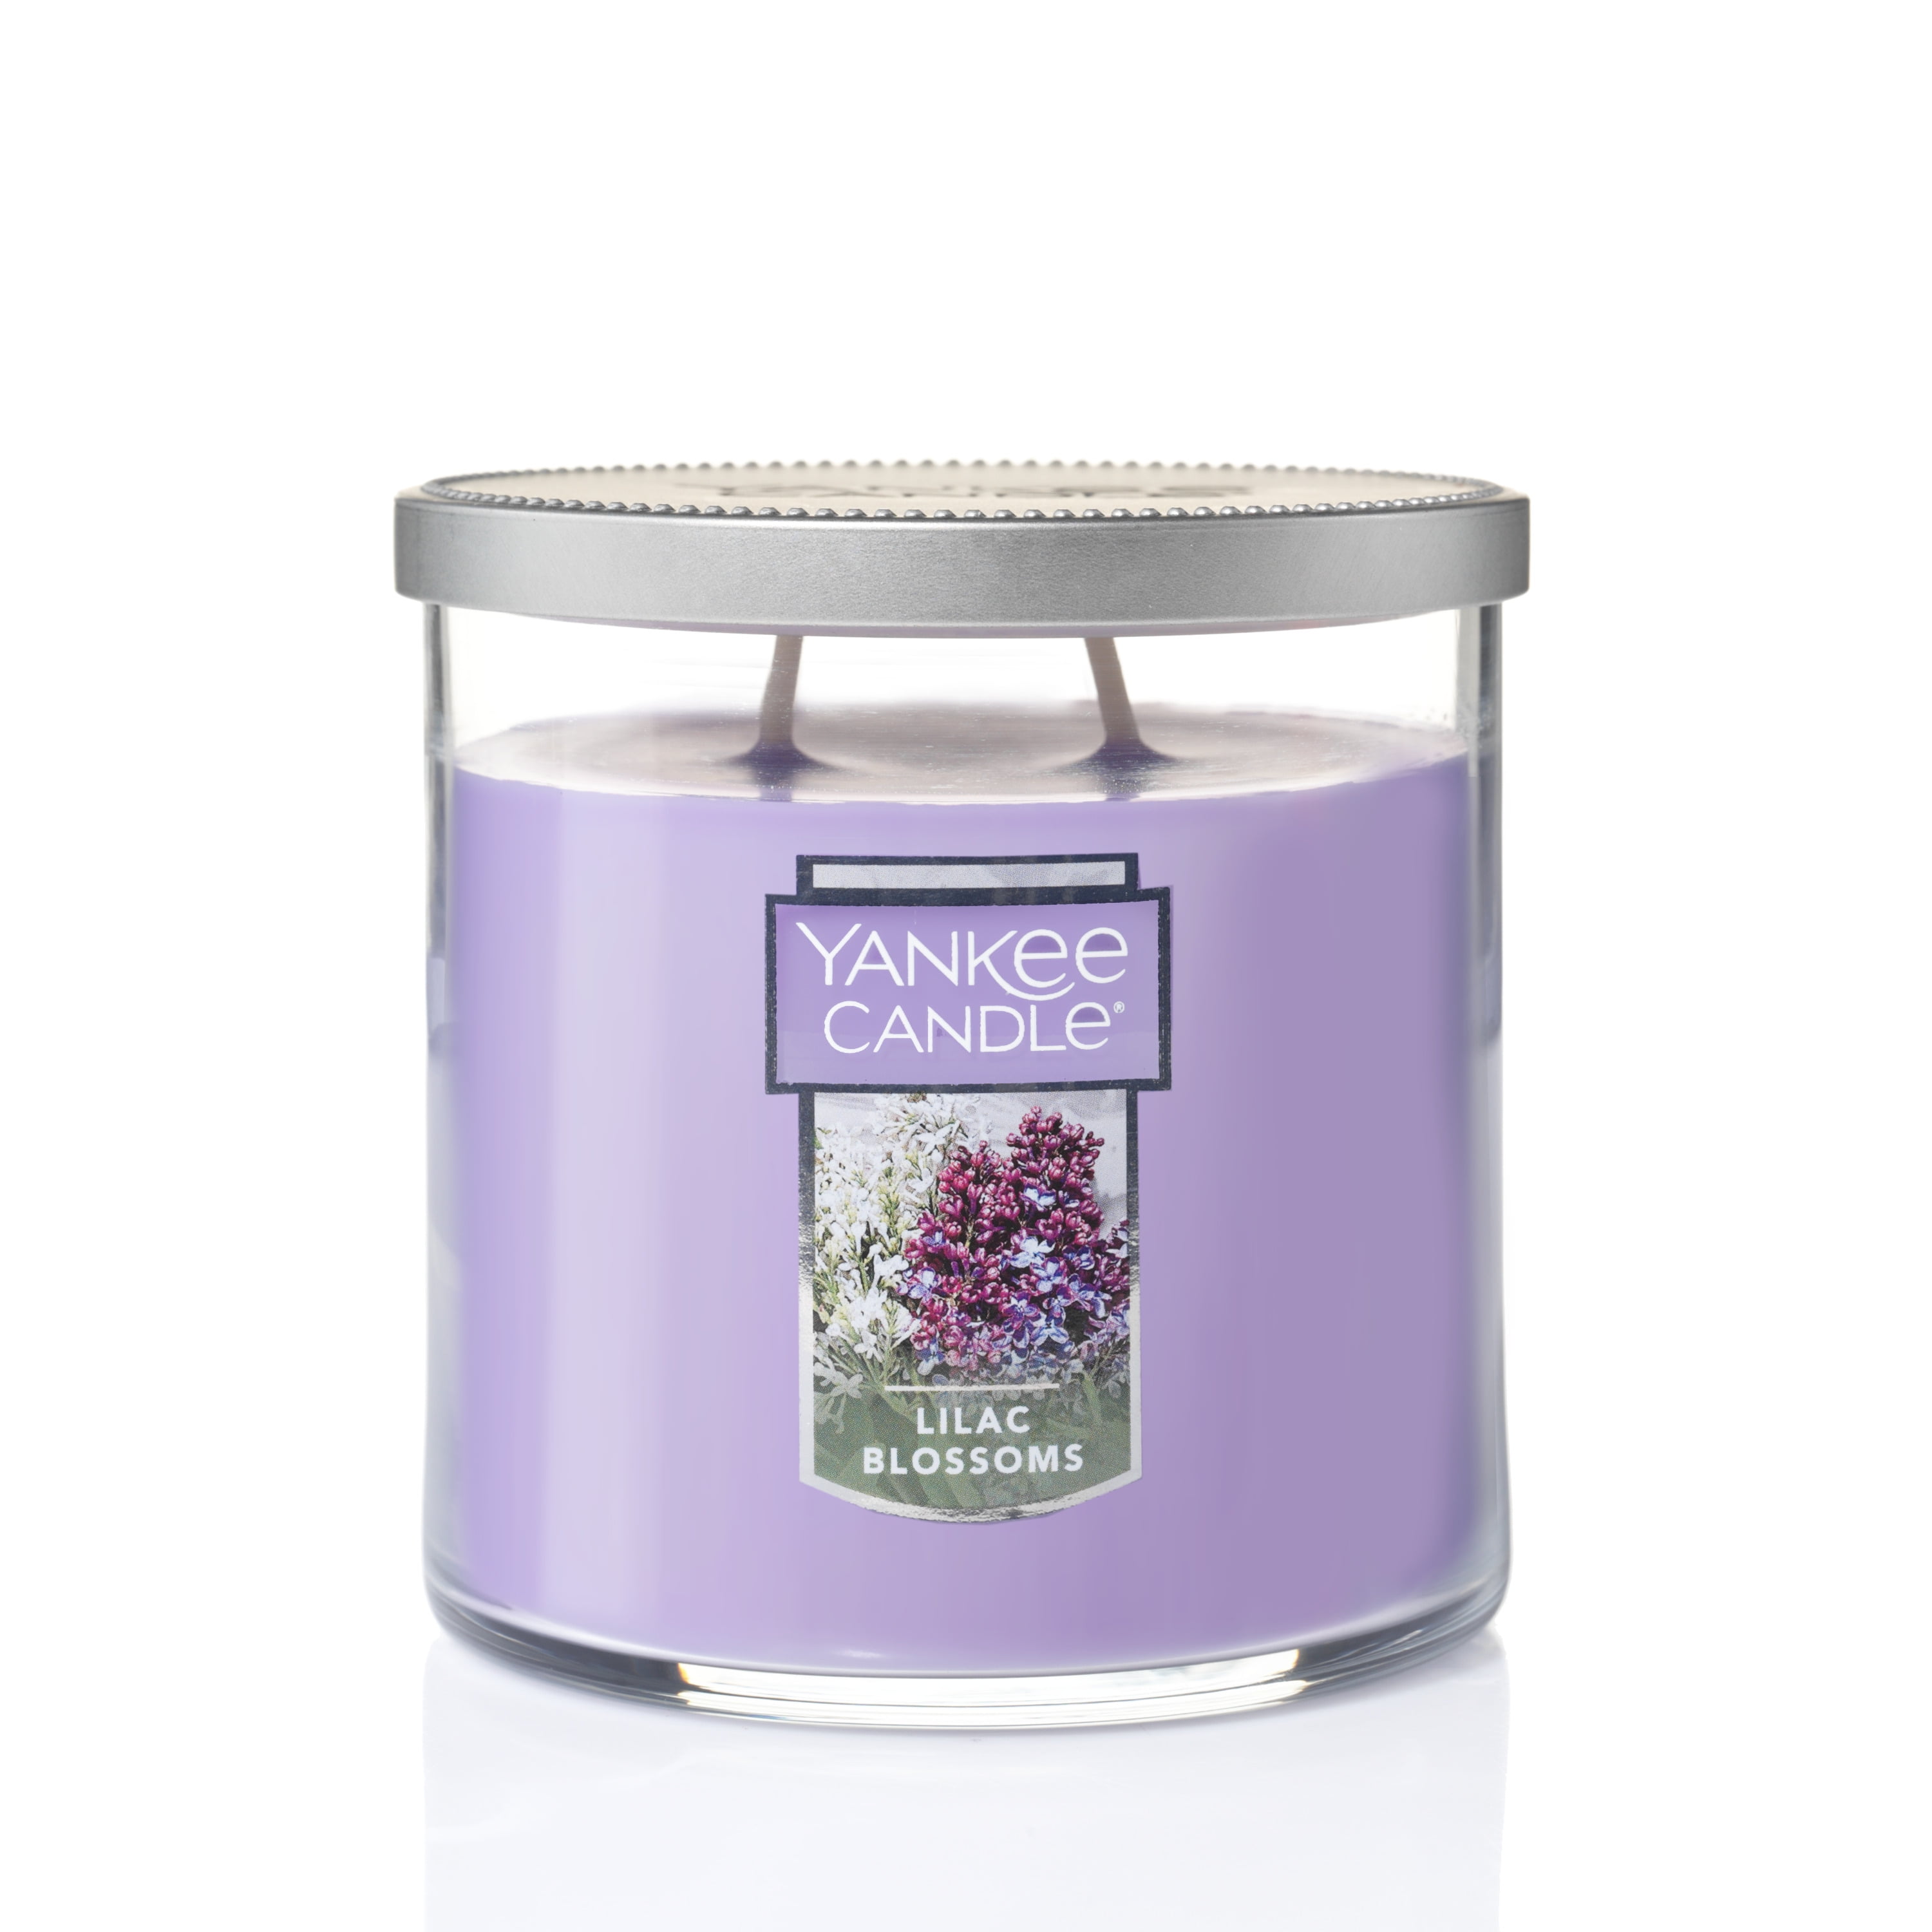 Yankee Candle Lilac Blossoms Medium 2-Wick Tumbler Candle - Walmart.com ...